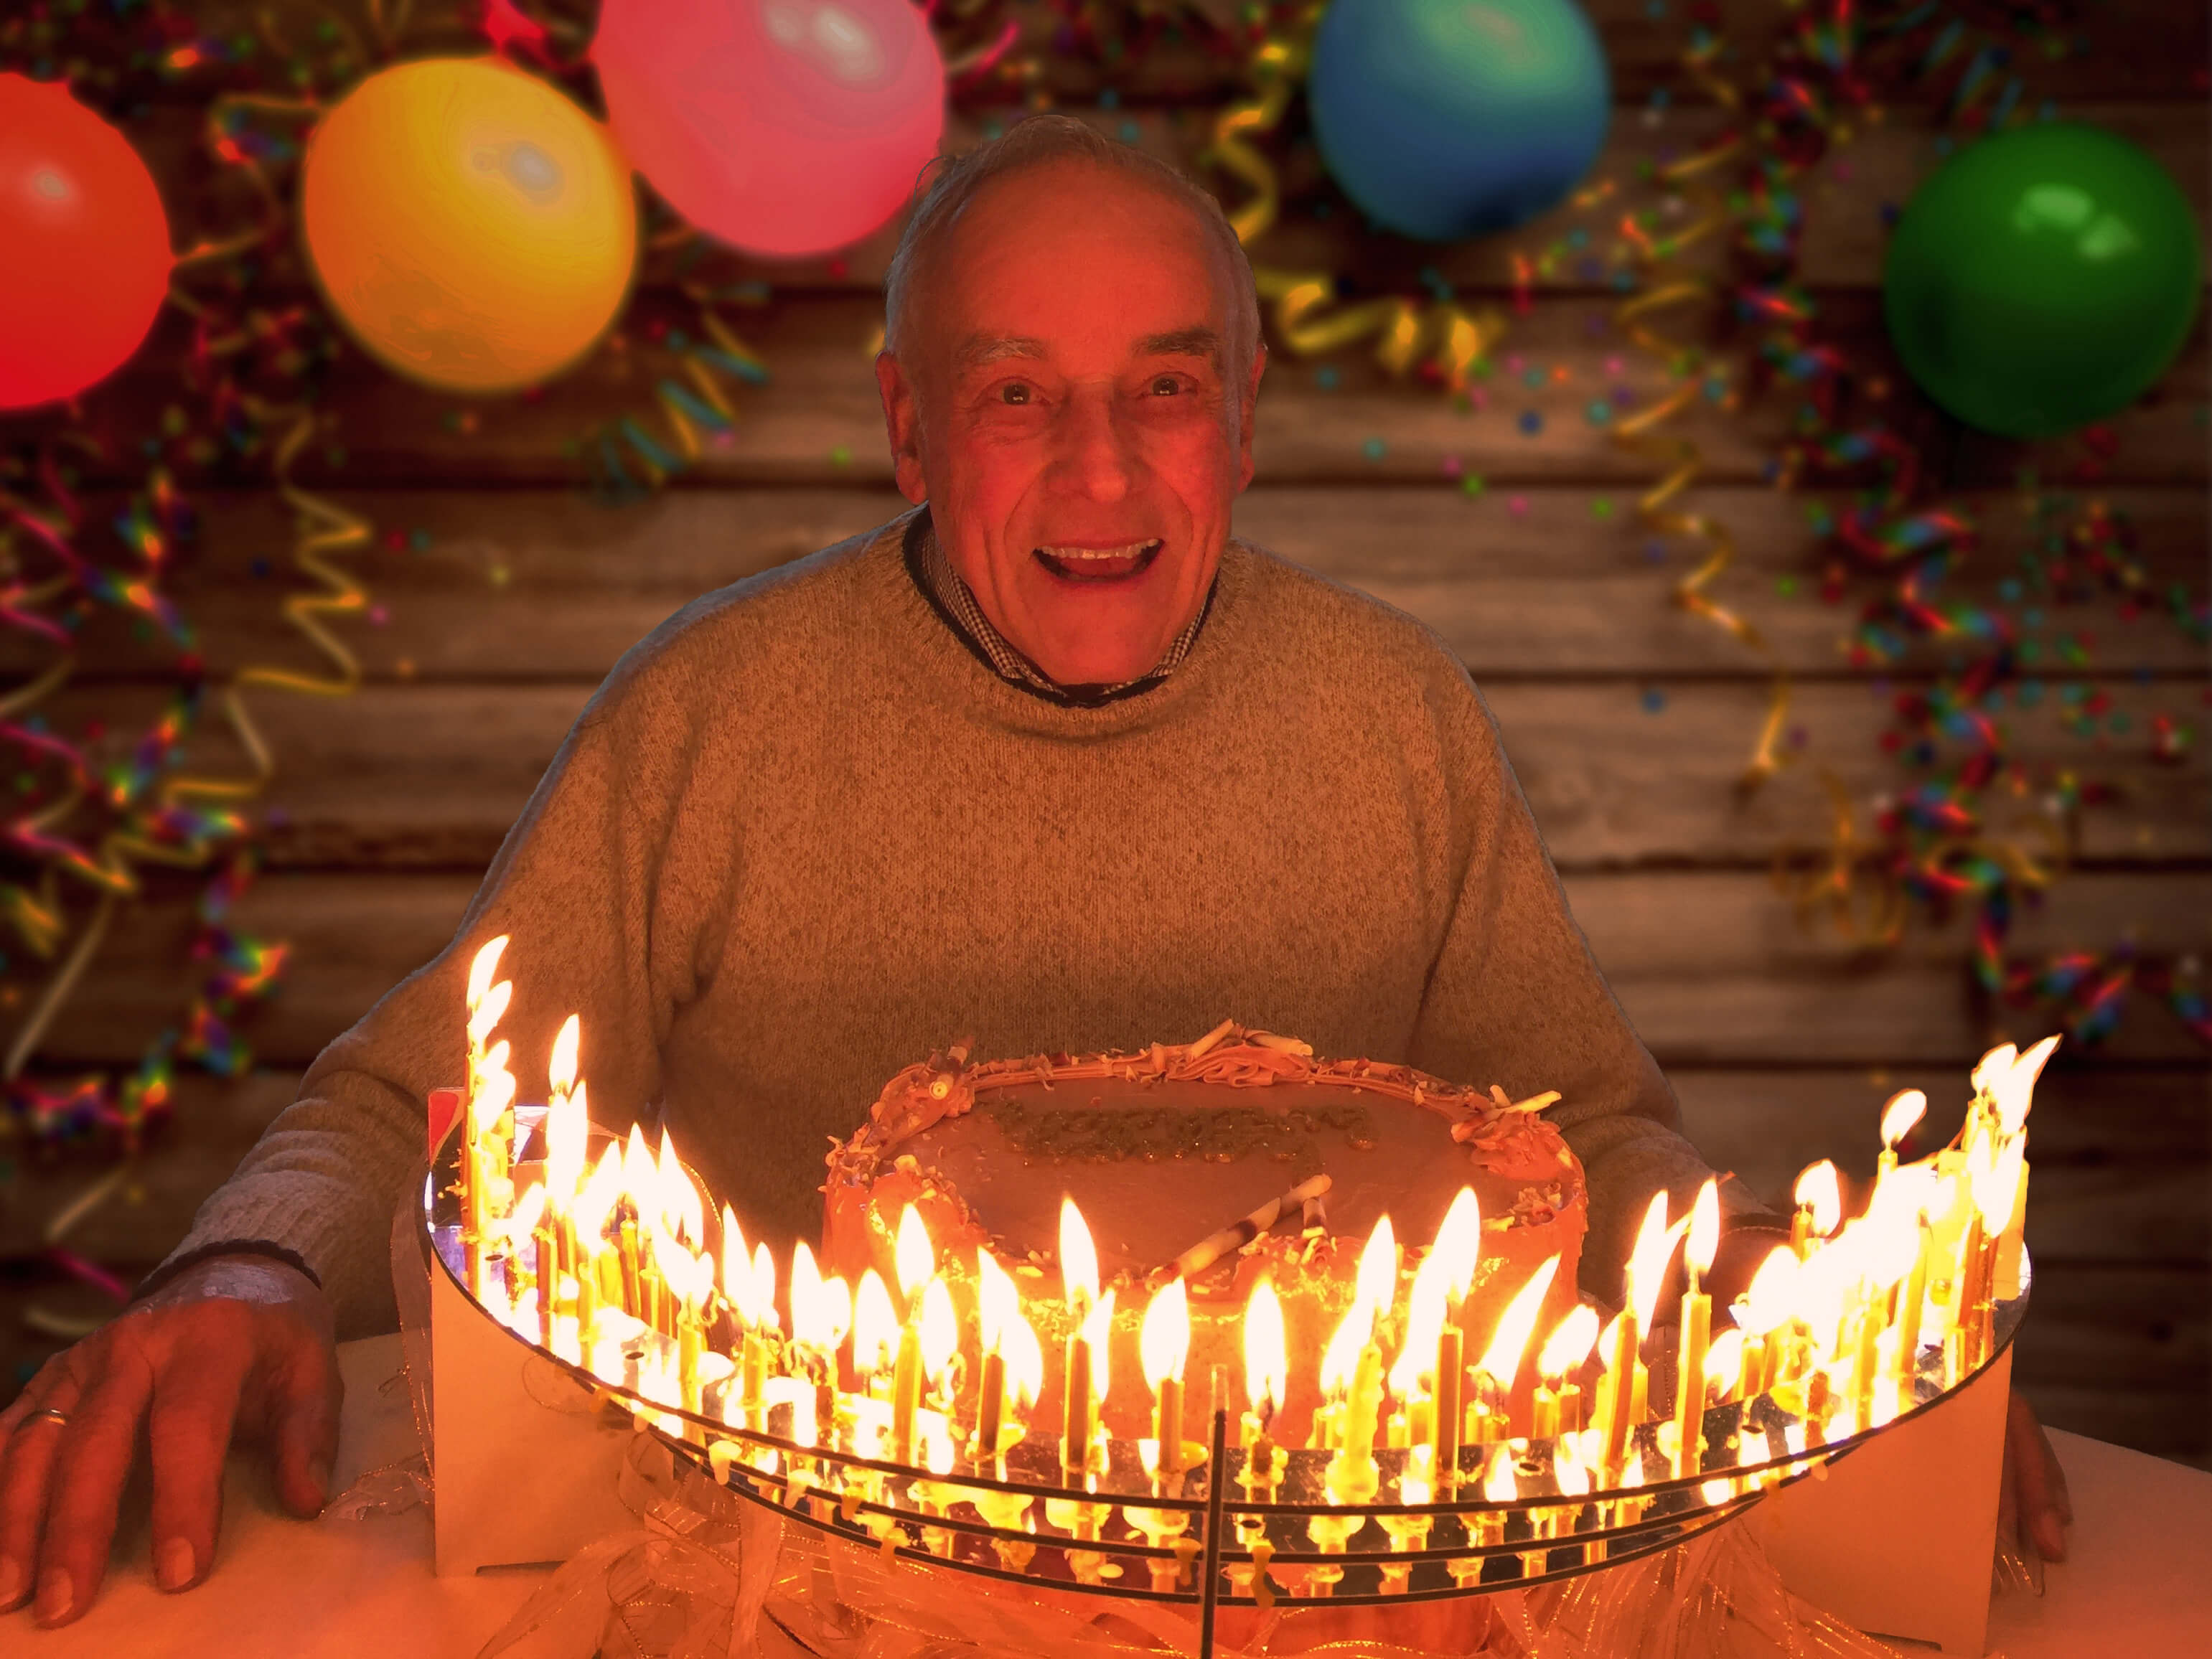 Enjoying his 80th birthday, Knight Merritt, inventor of the Celebration Stadium birthday candle holder.